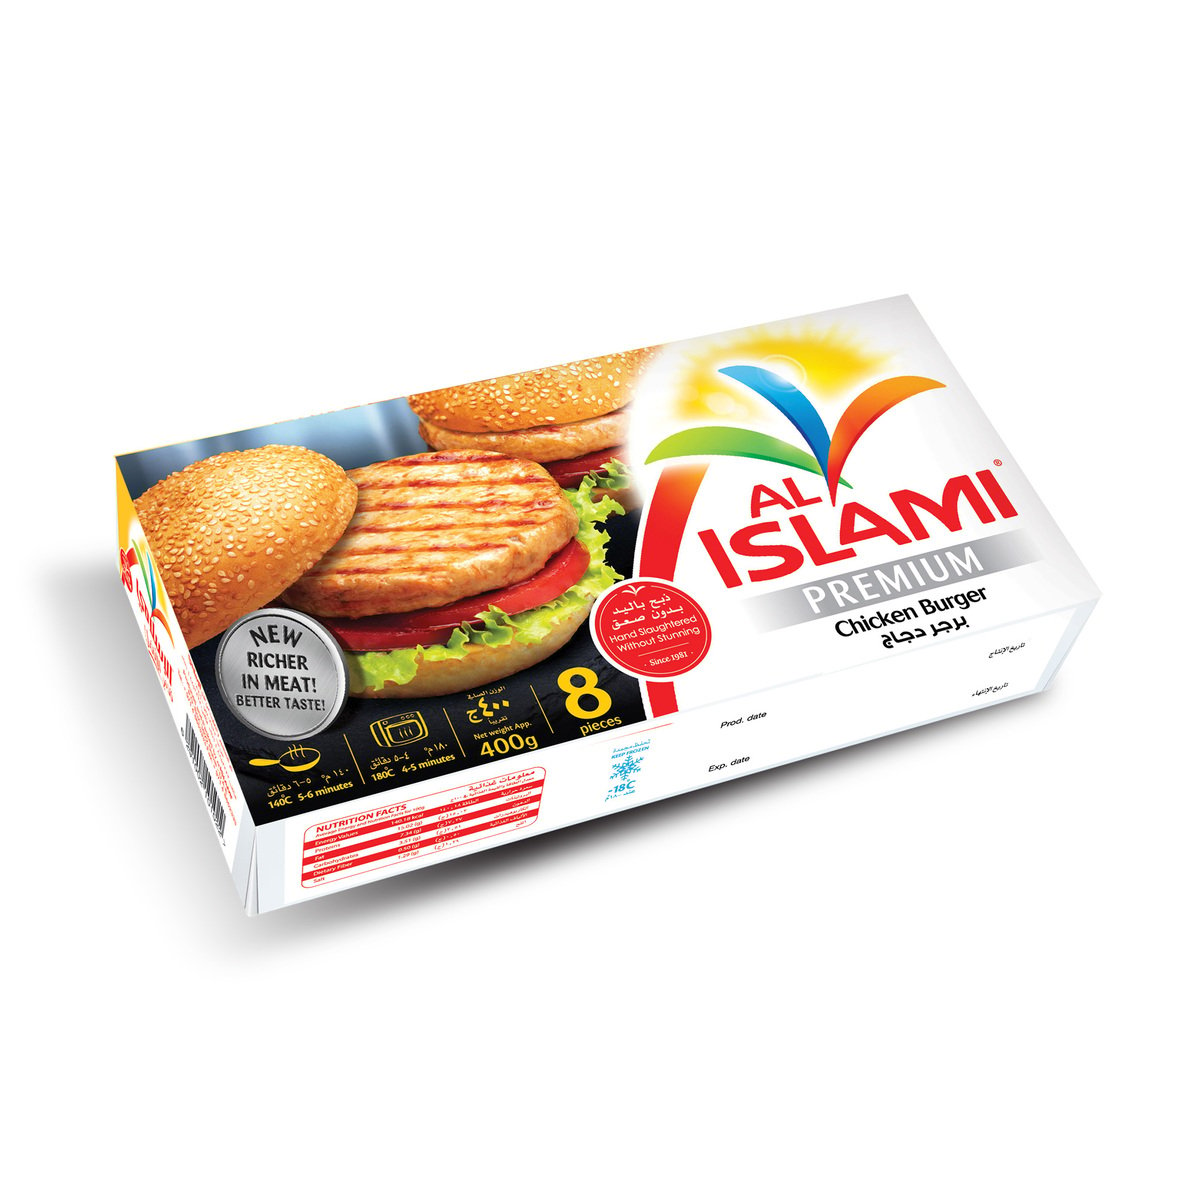 Al Islami Premium Chicken Burger 400g